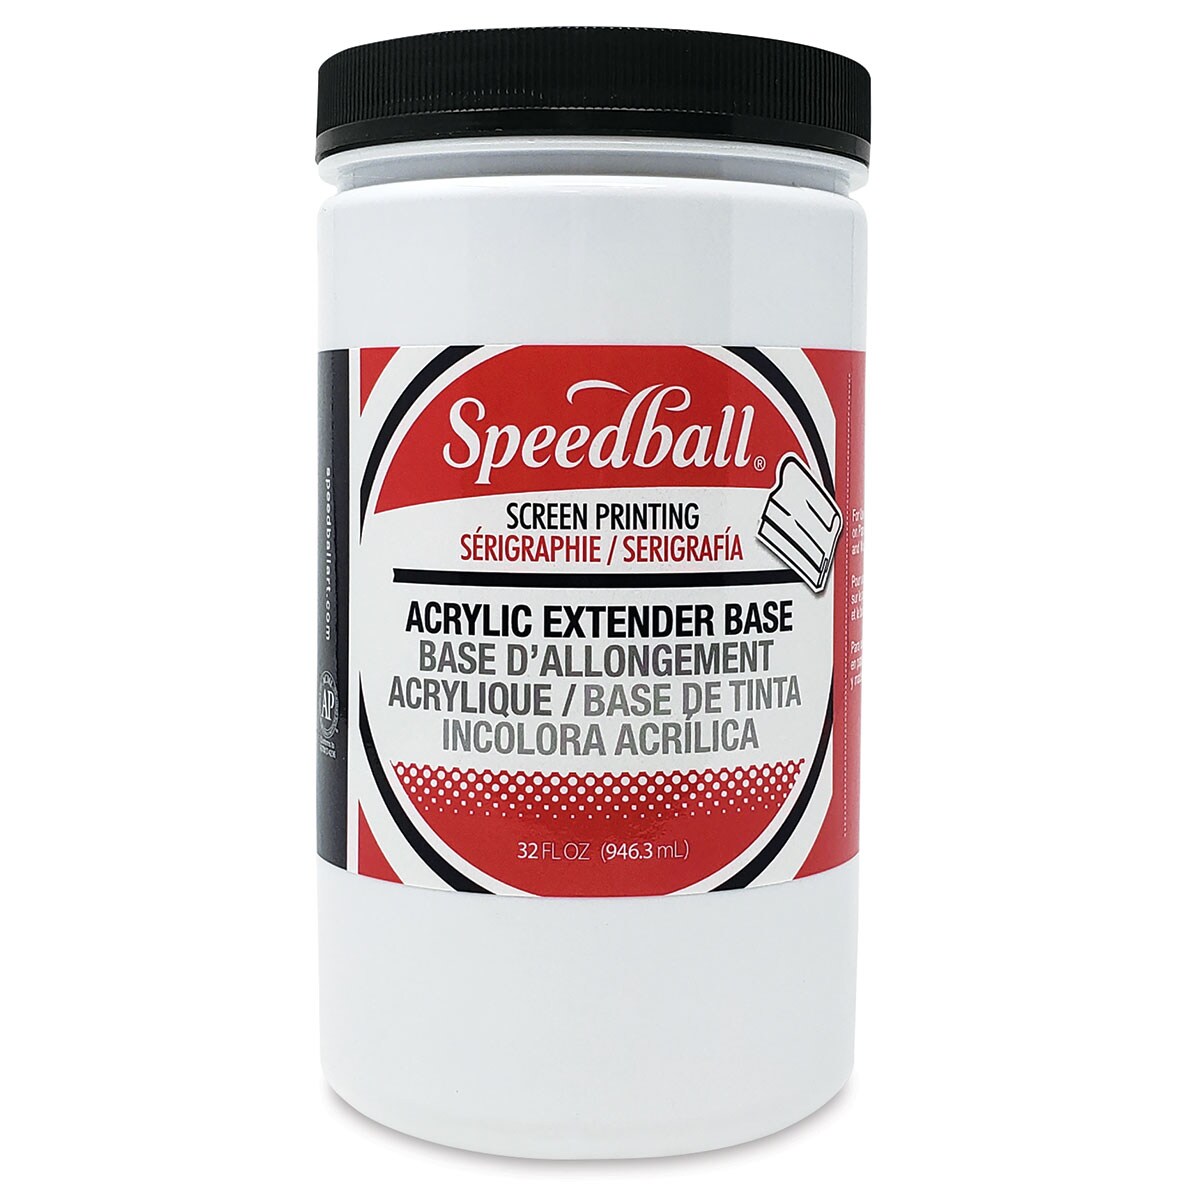 Speedball Screen Printing Acrylic Extender Base - Quart, Jar